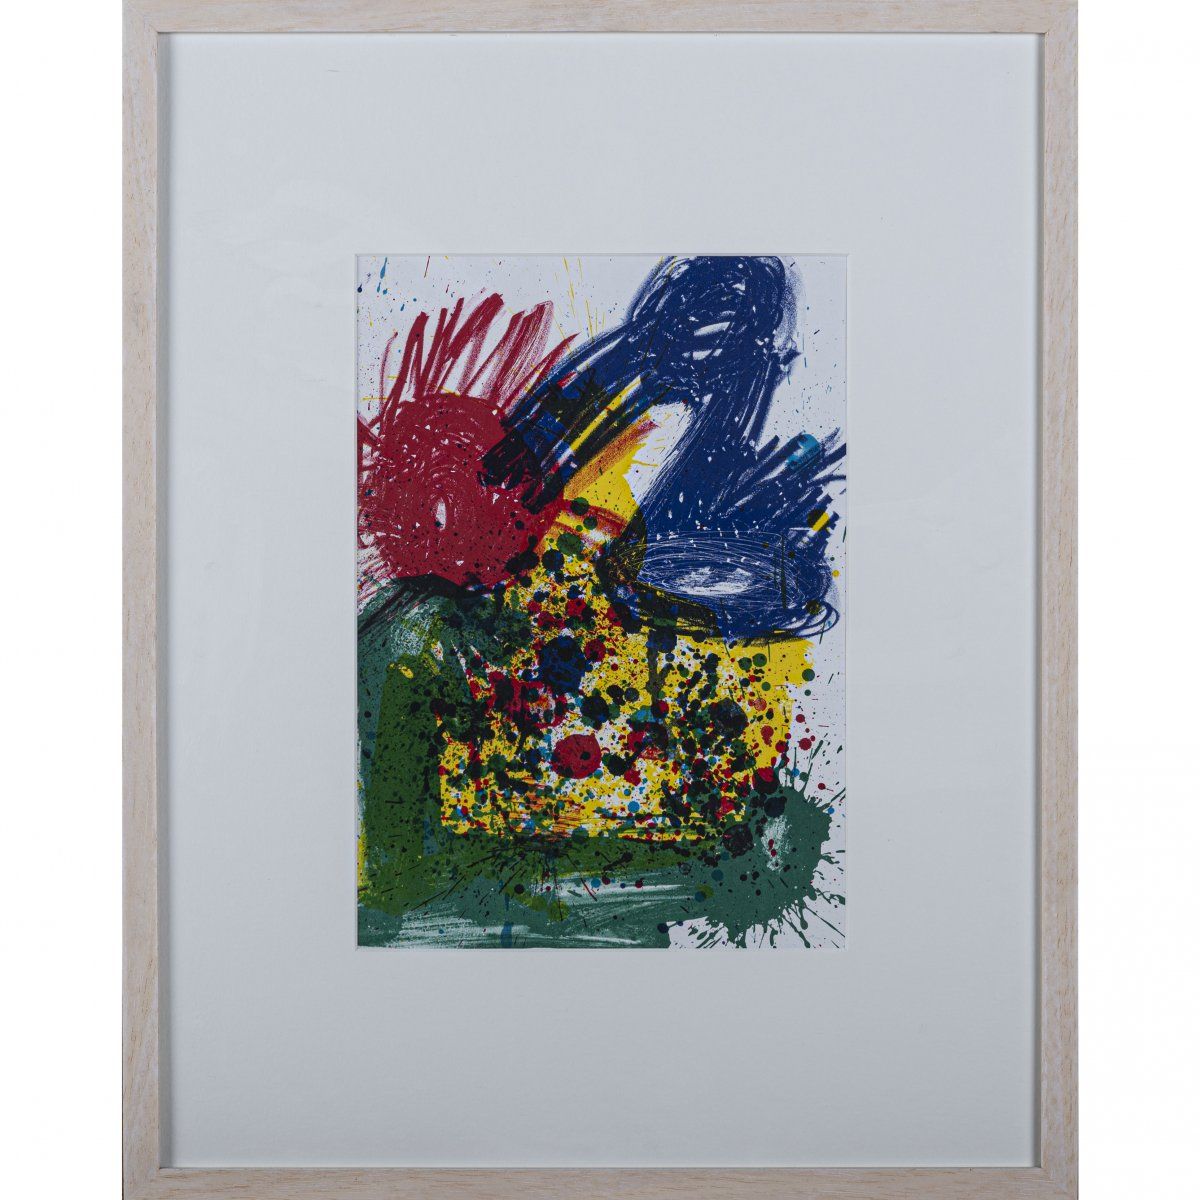 Null 丁雄泉（1929年上海-2010年纽约），《无题》选自《一分钱的生活》，1964年，彩色平版印刷在编织纸上。38.8 x 26.9厘米（剪裁），67.&hellip;